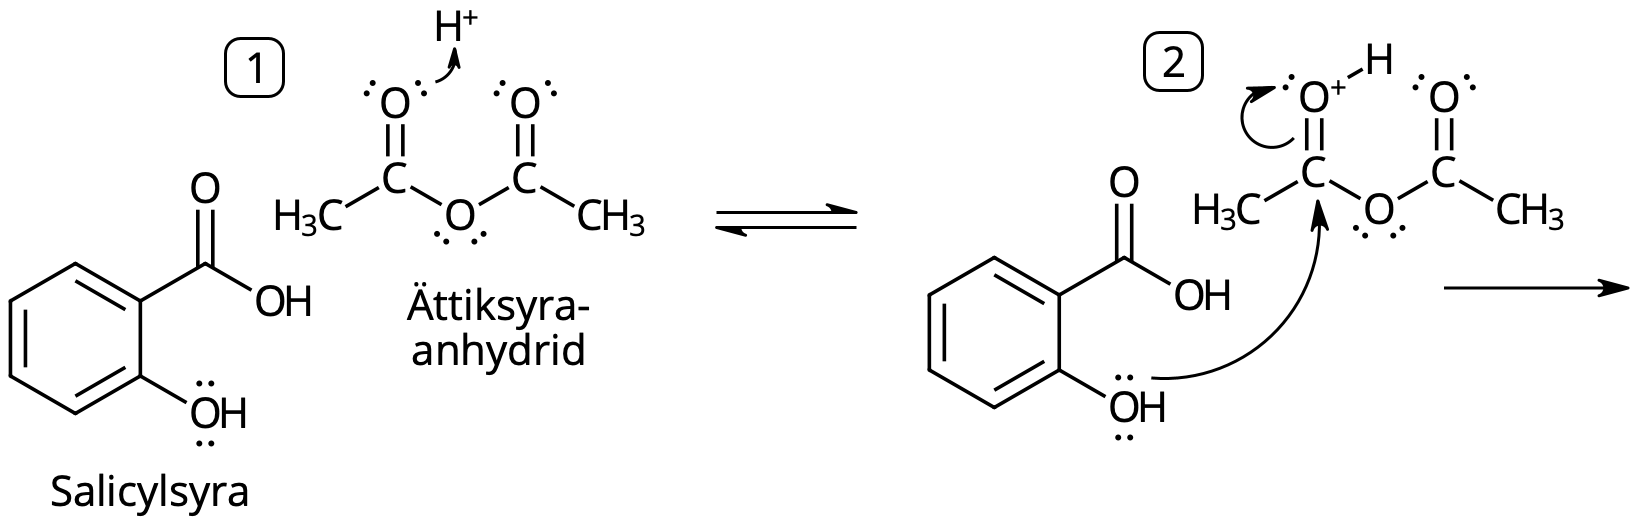 salicylsyra attiksyraanhydrid acetylsalicylsyra reaktionsmekanism 1